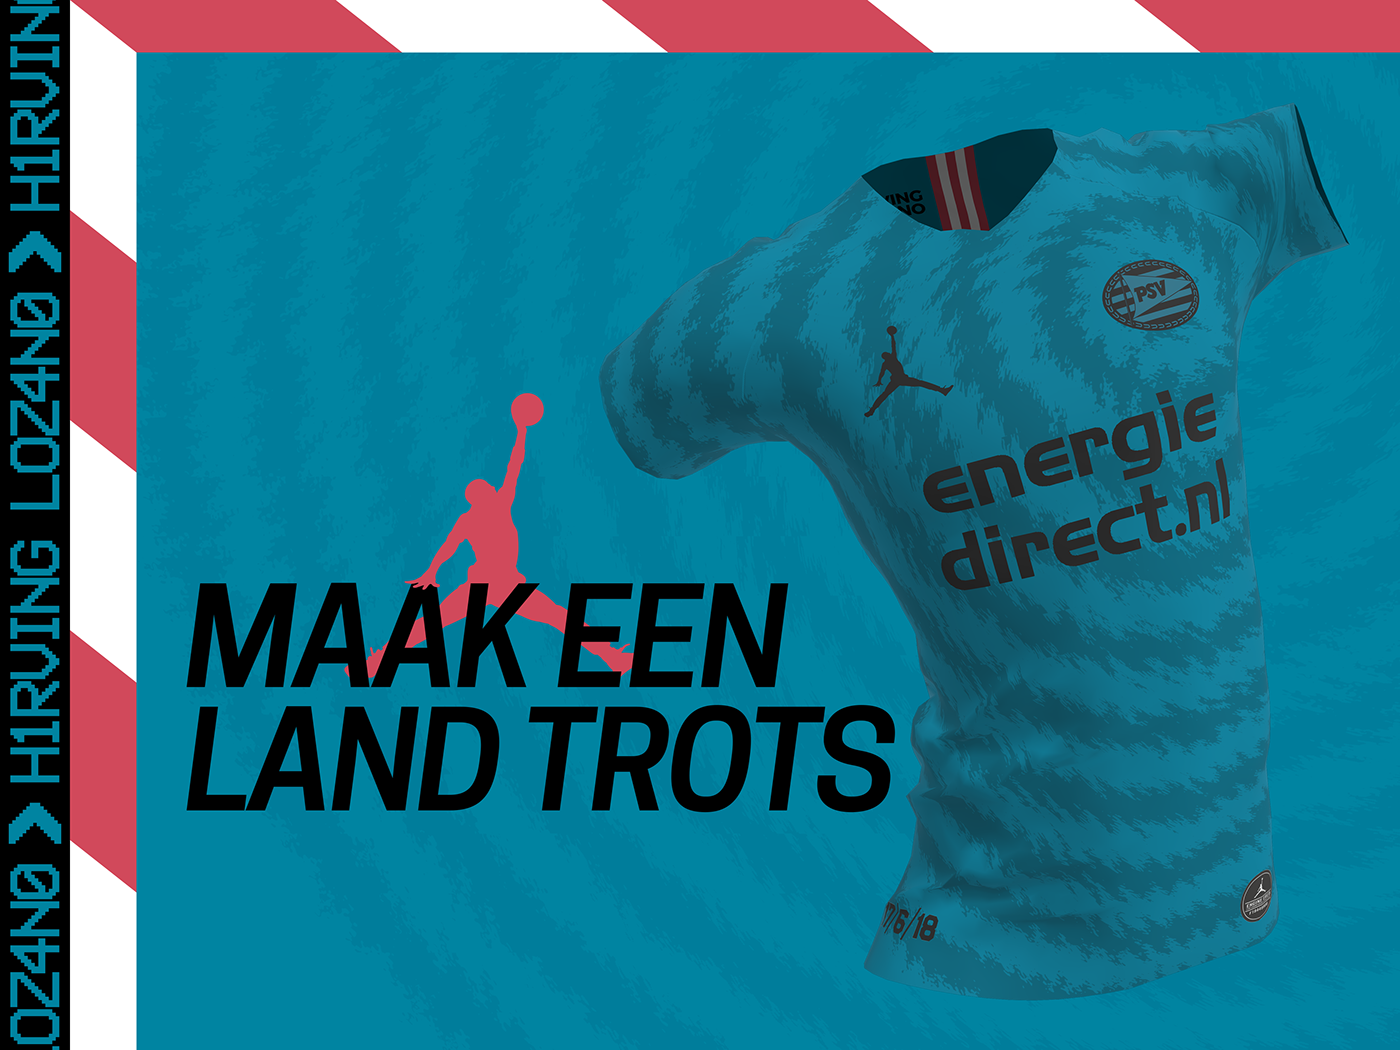 Nike jordan PSV football kit soccer jersey shirt sport Kit Concept